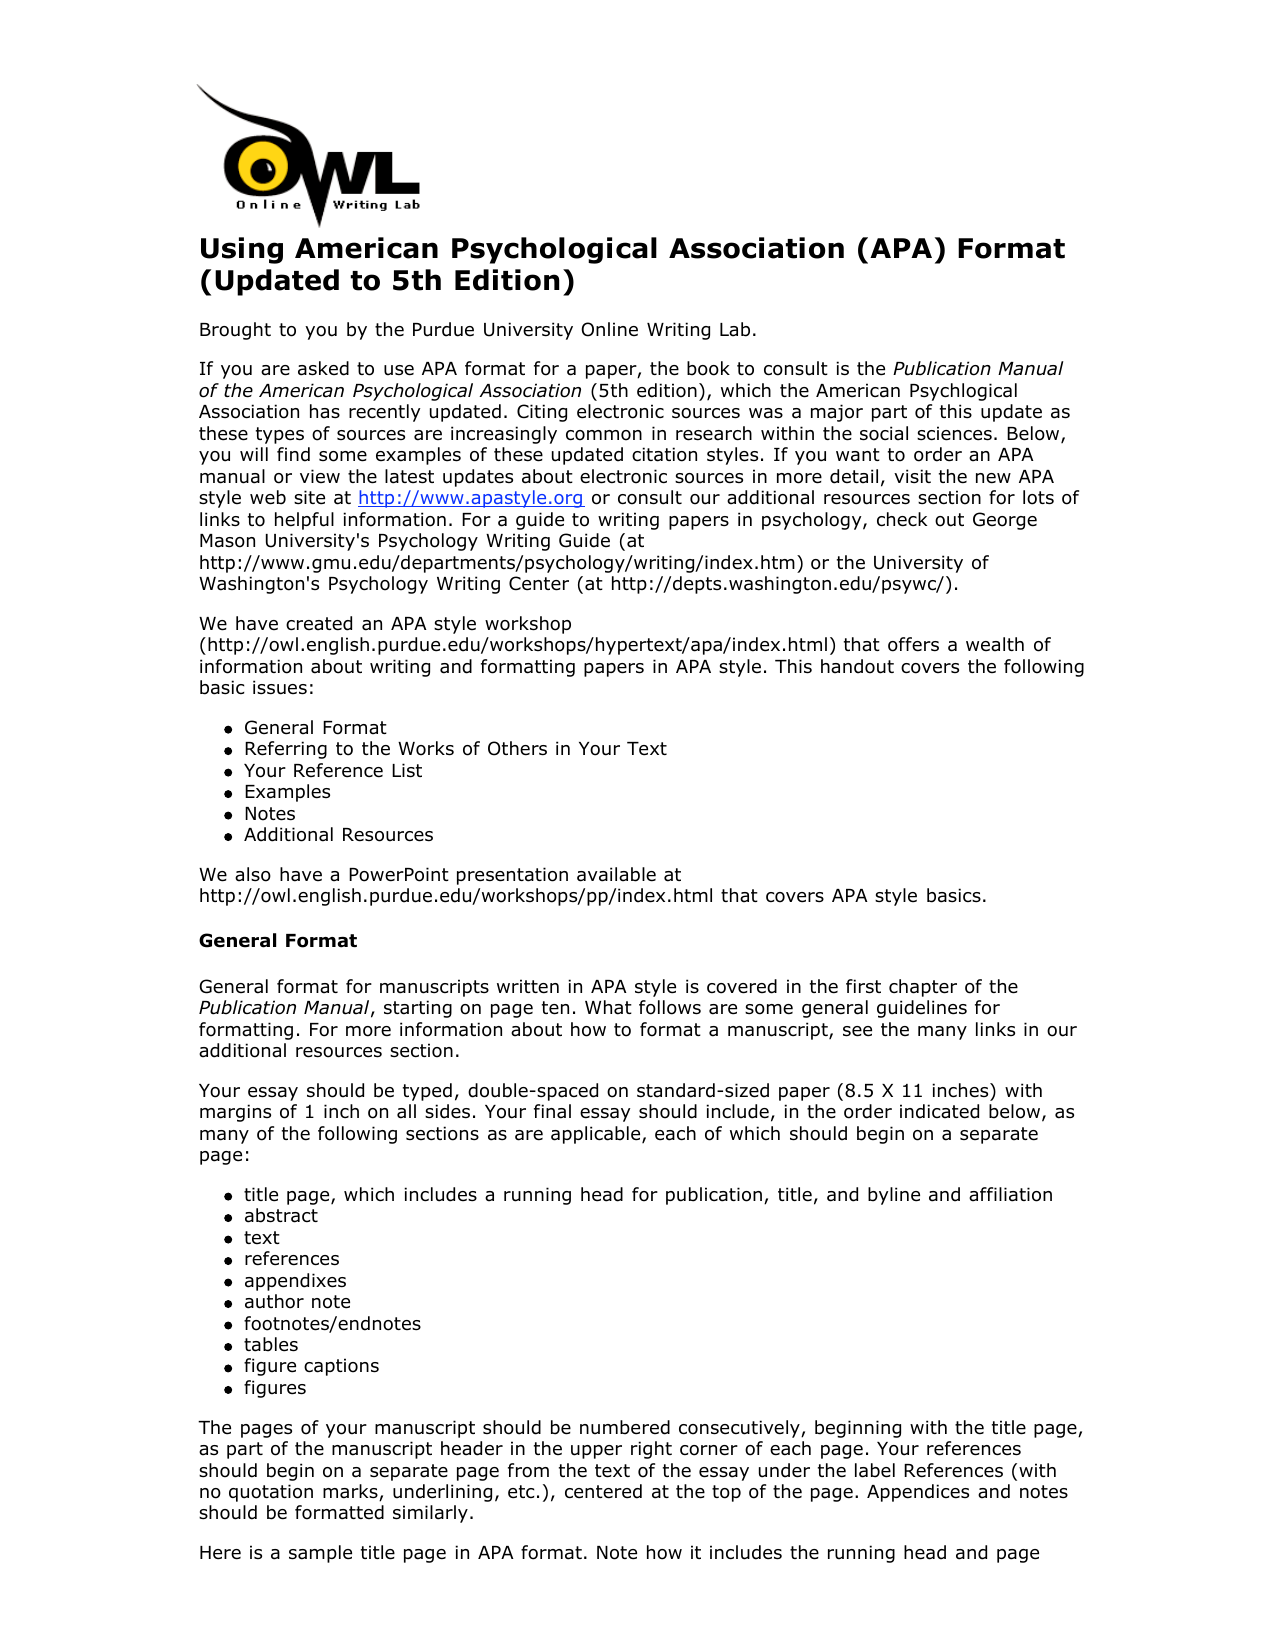 Using American Psychological Association (APA) Format (Updated